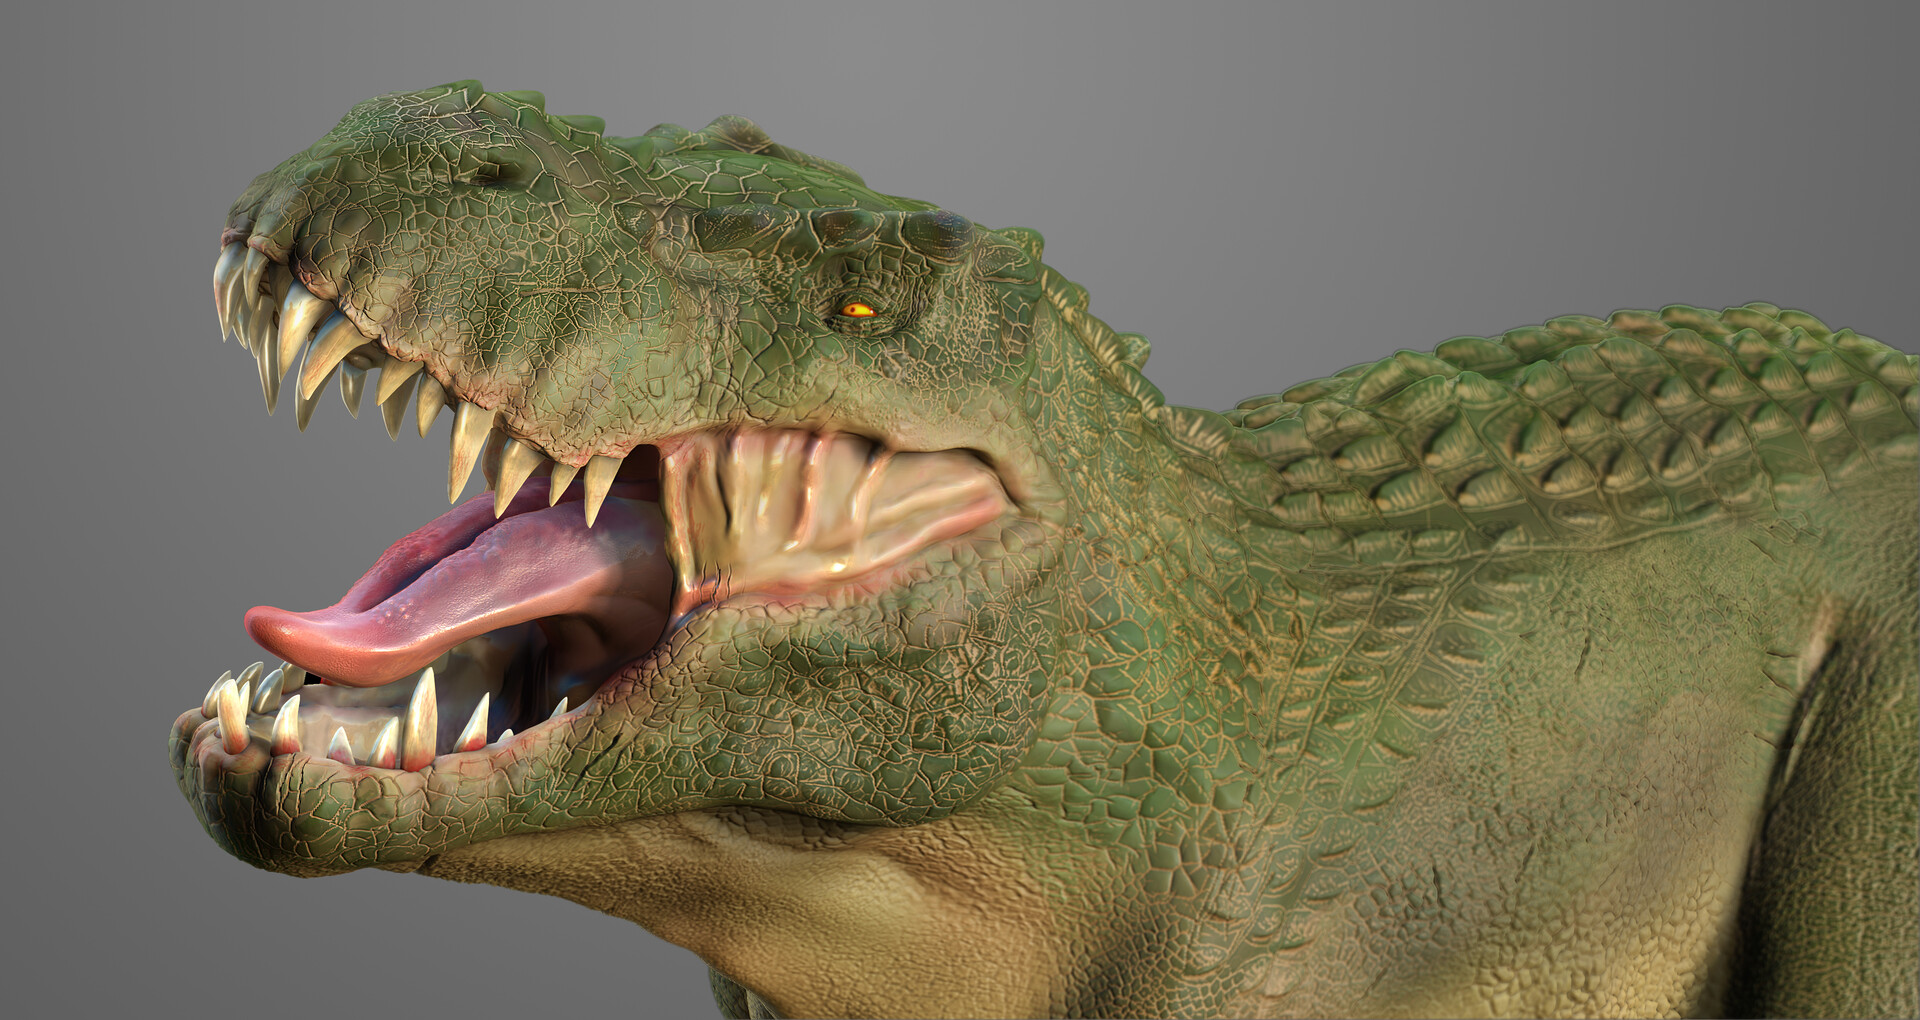 ArtStation - Creature Design - Concept T-rex Dinosaur